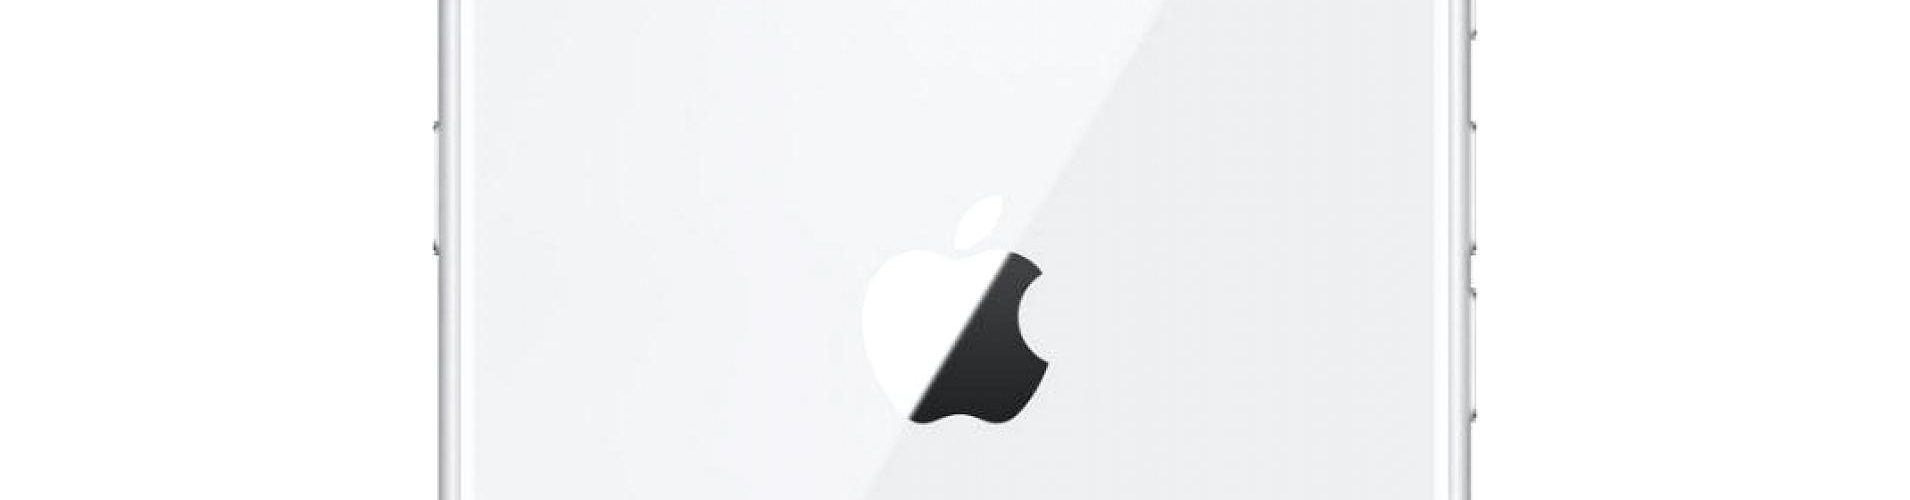 SmartPhone Spotlight: iPhone 8 Plus